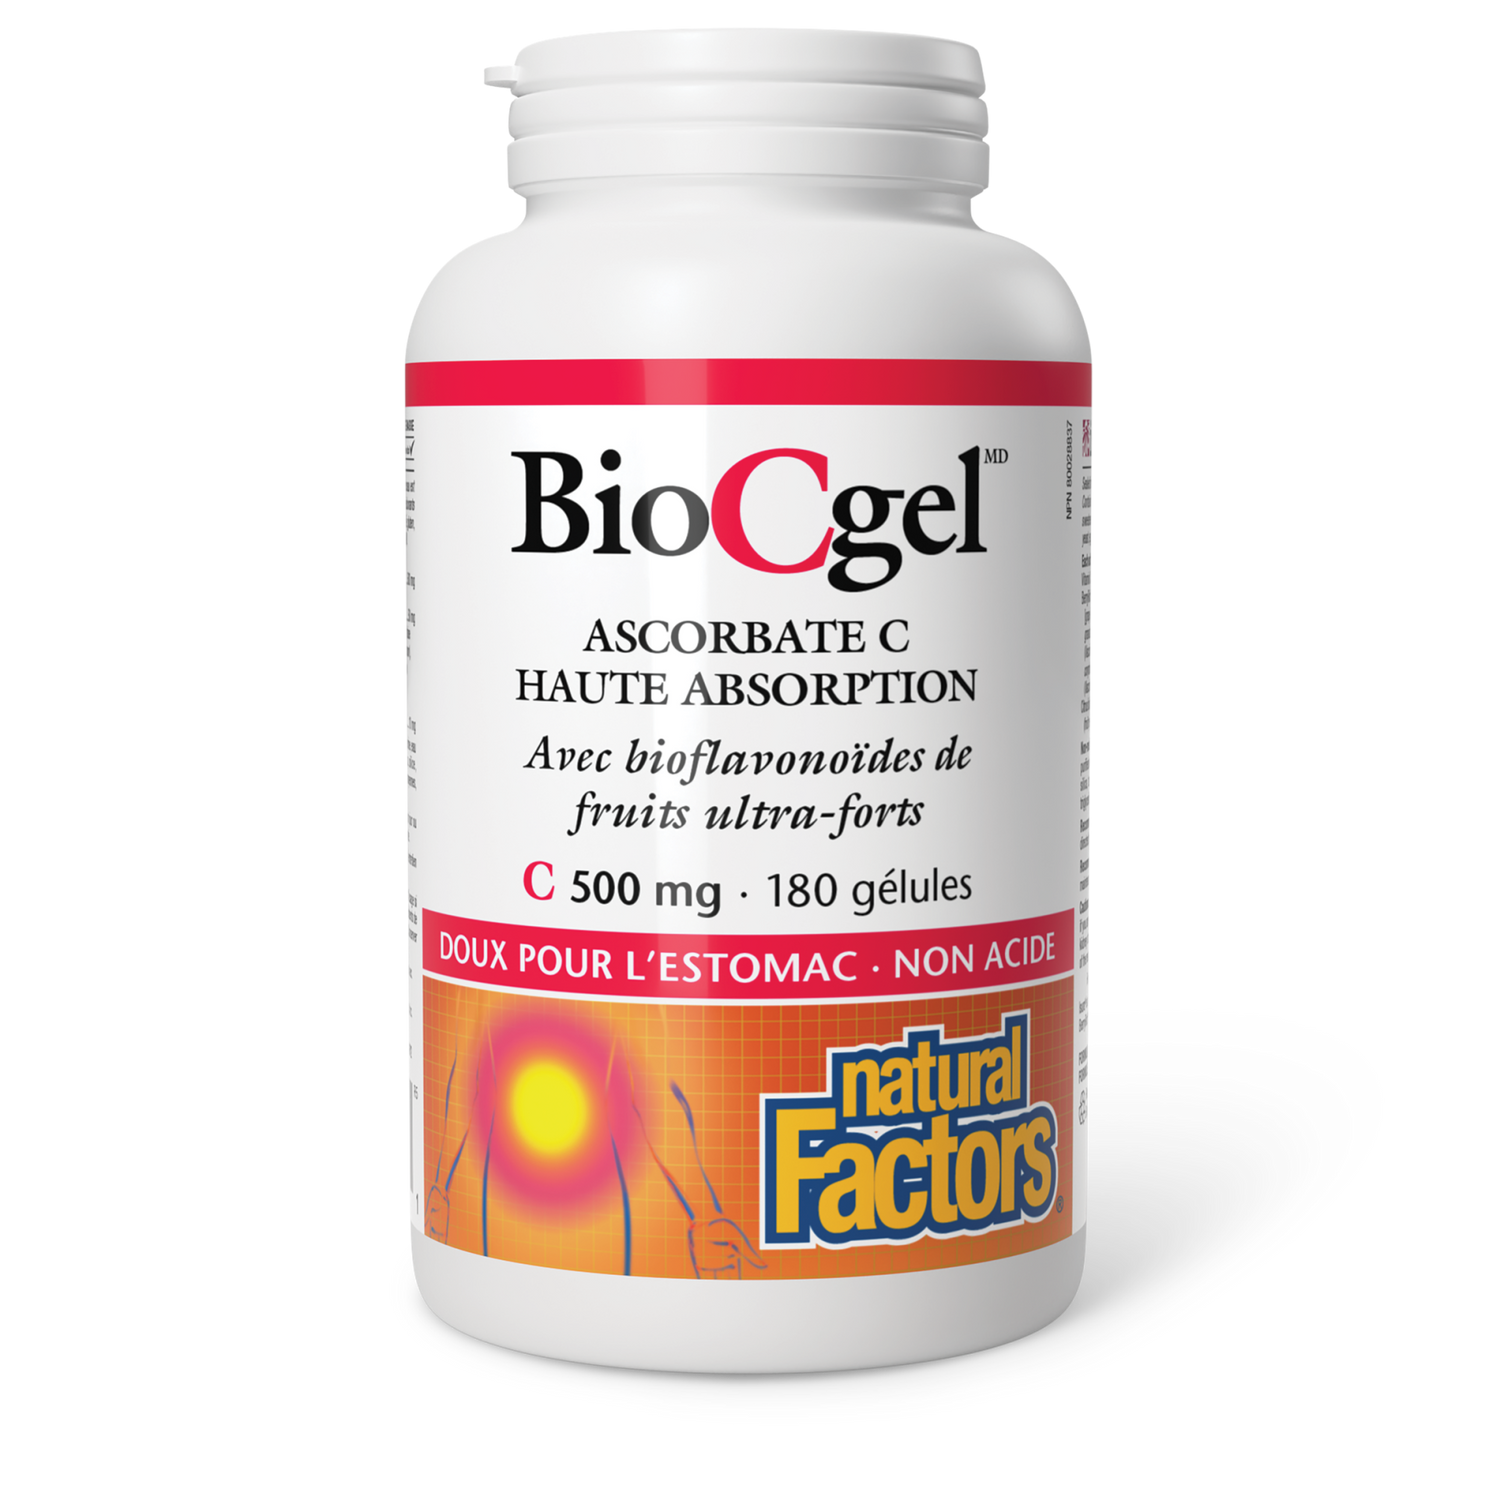 BioCgel Ascorbate C Haute absorption 500 mg, Natural Factors|v|image|1354